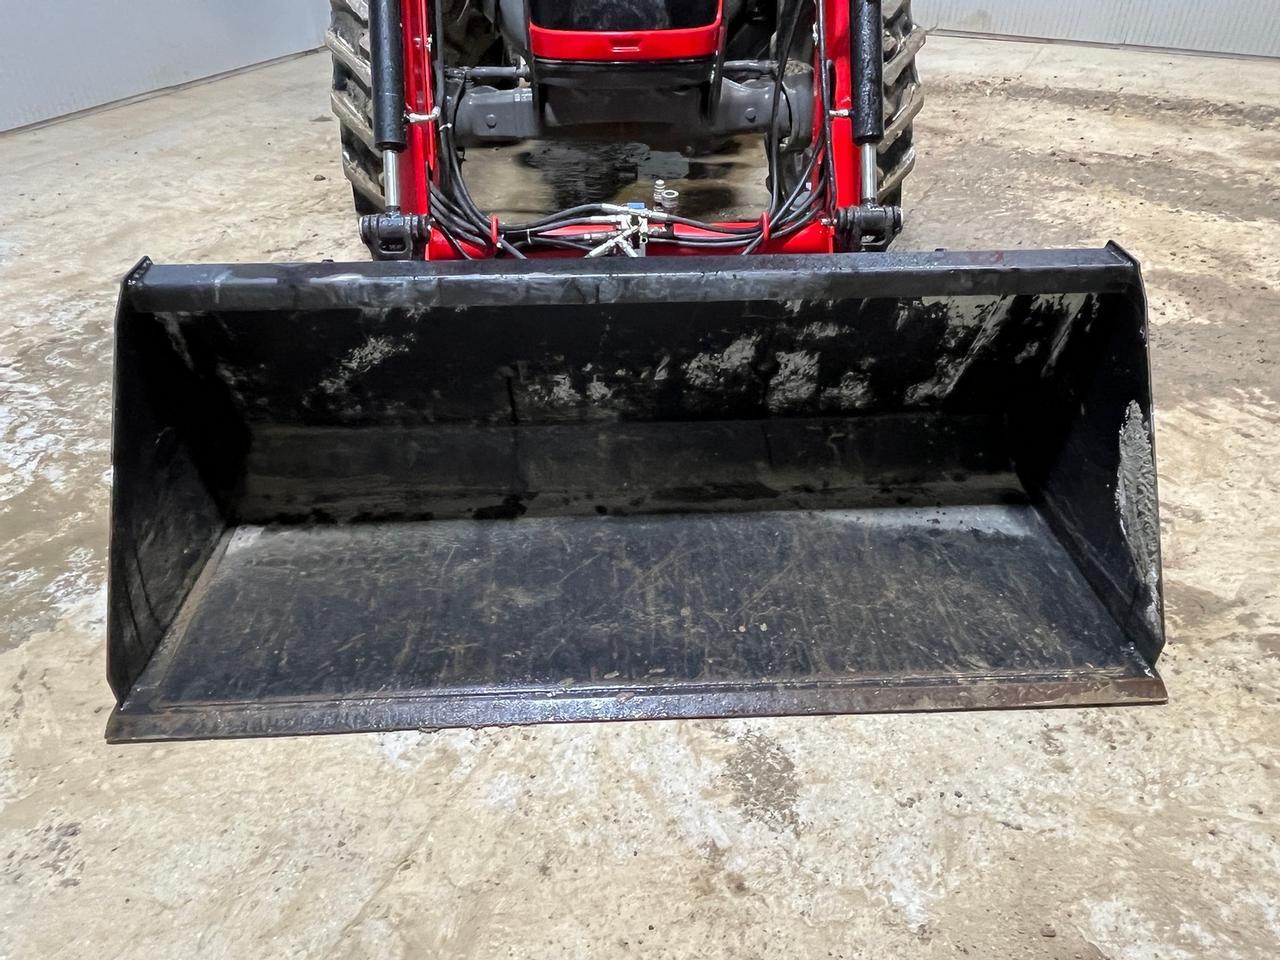 2019 Massey Ferguson 2607H Utility Tractor